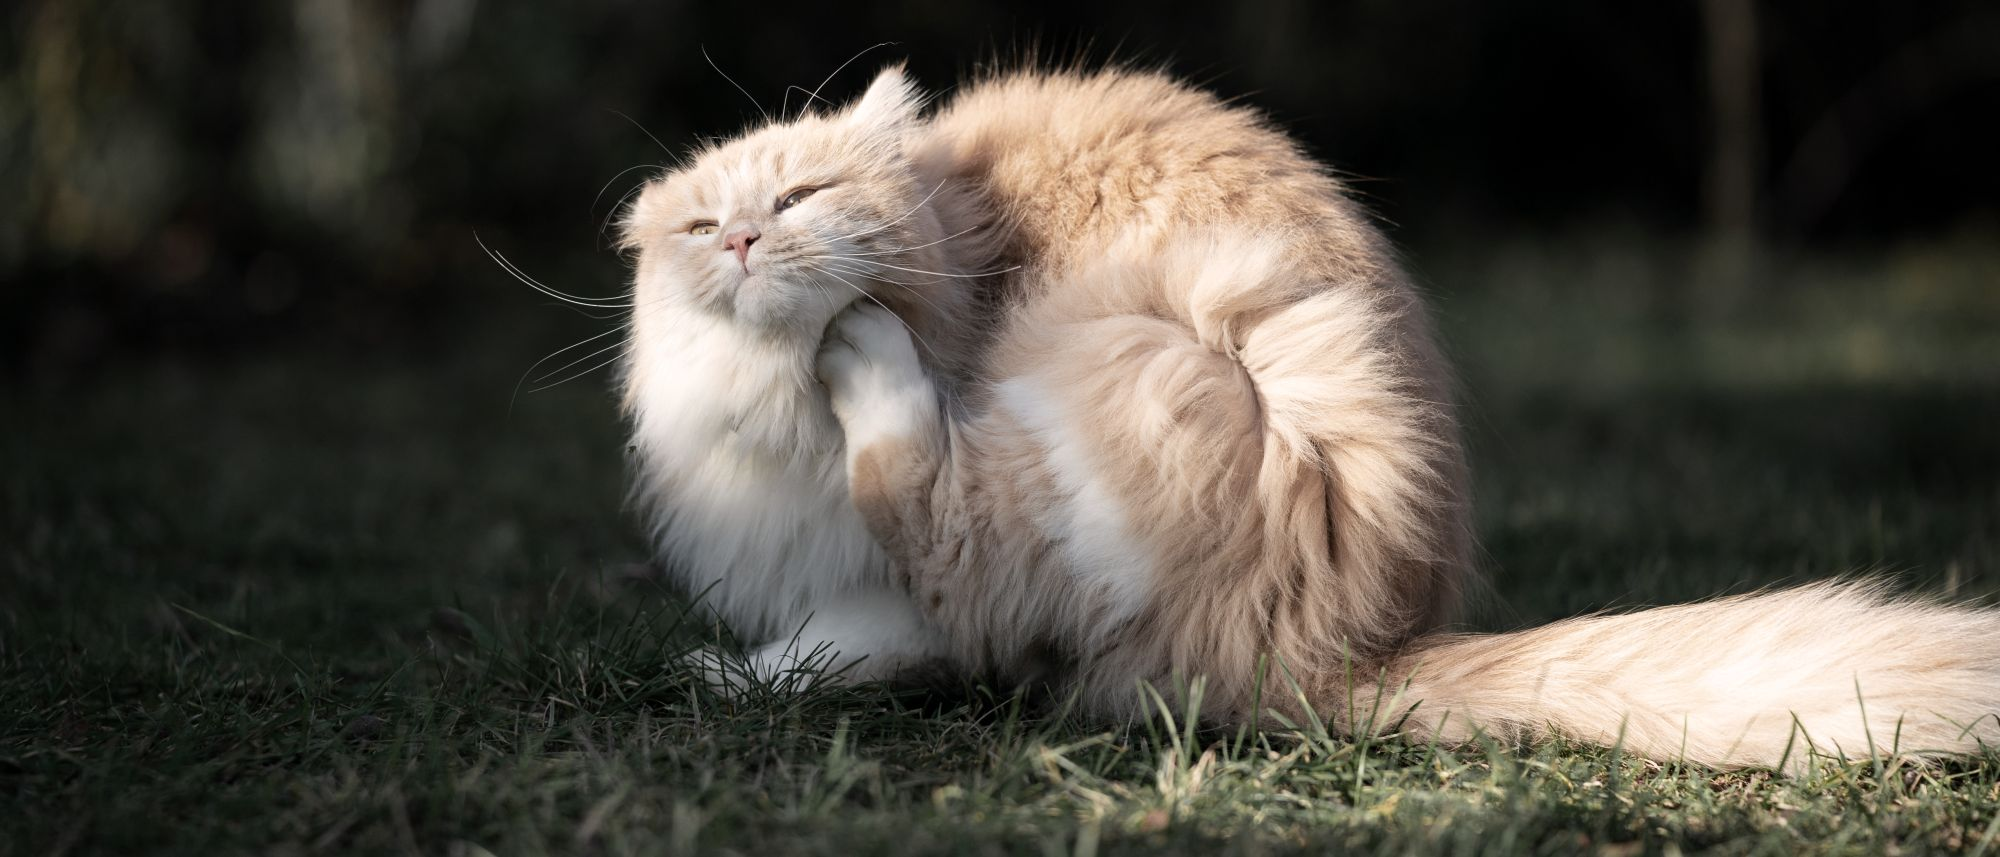 Ginger cat scratching ears sat on grass